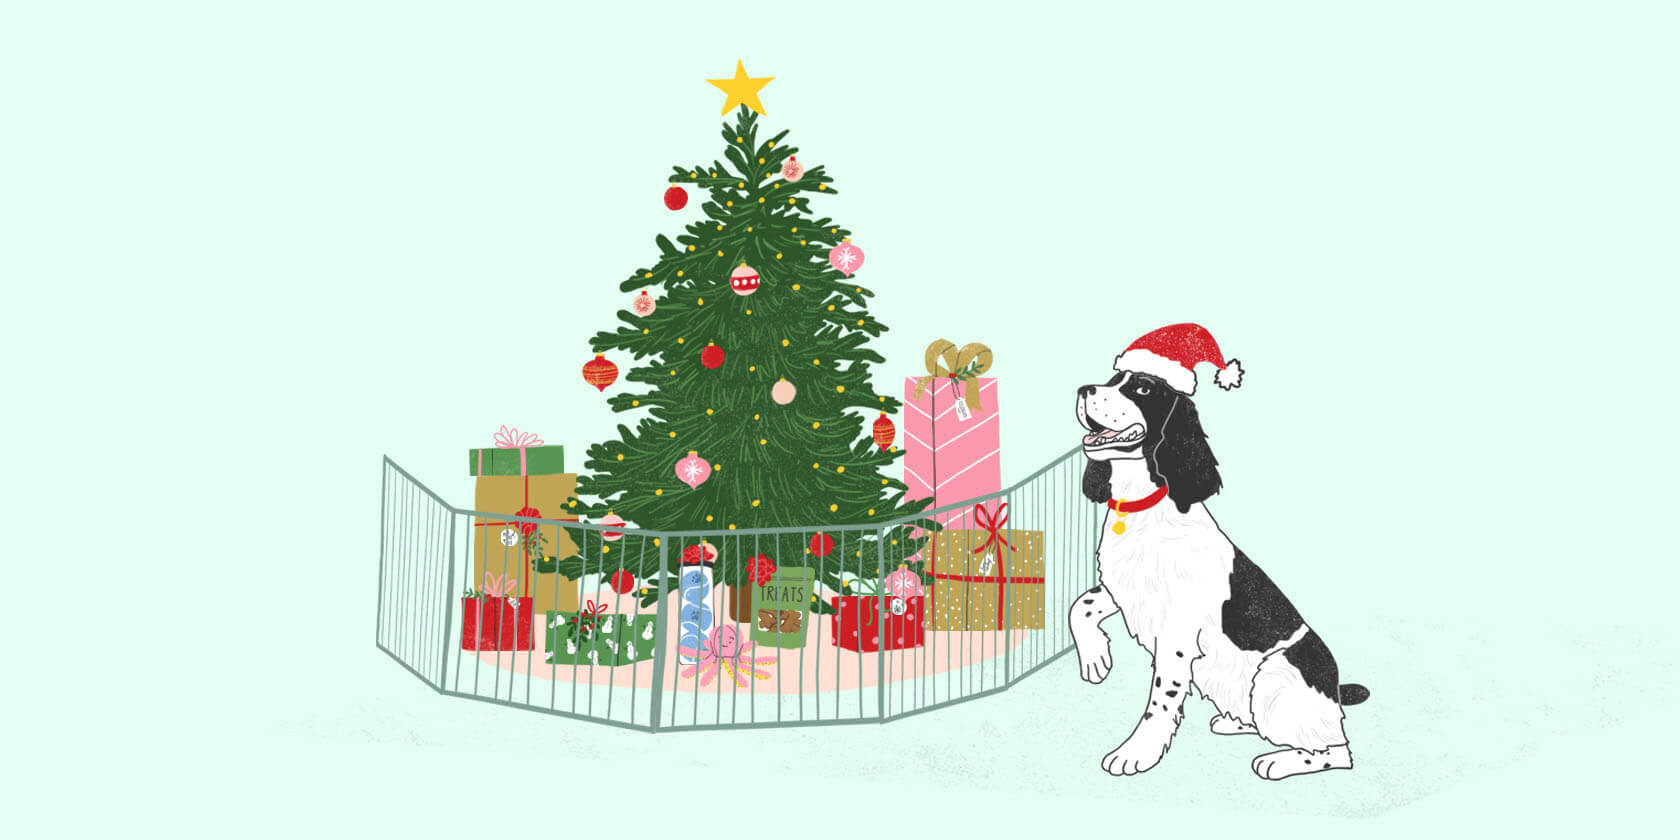 Dog sitting next to Christmas tree